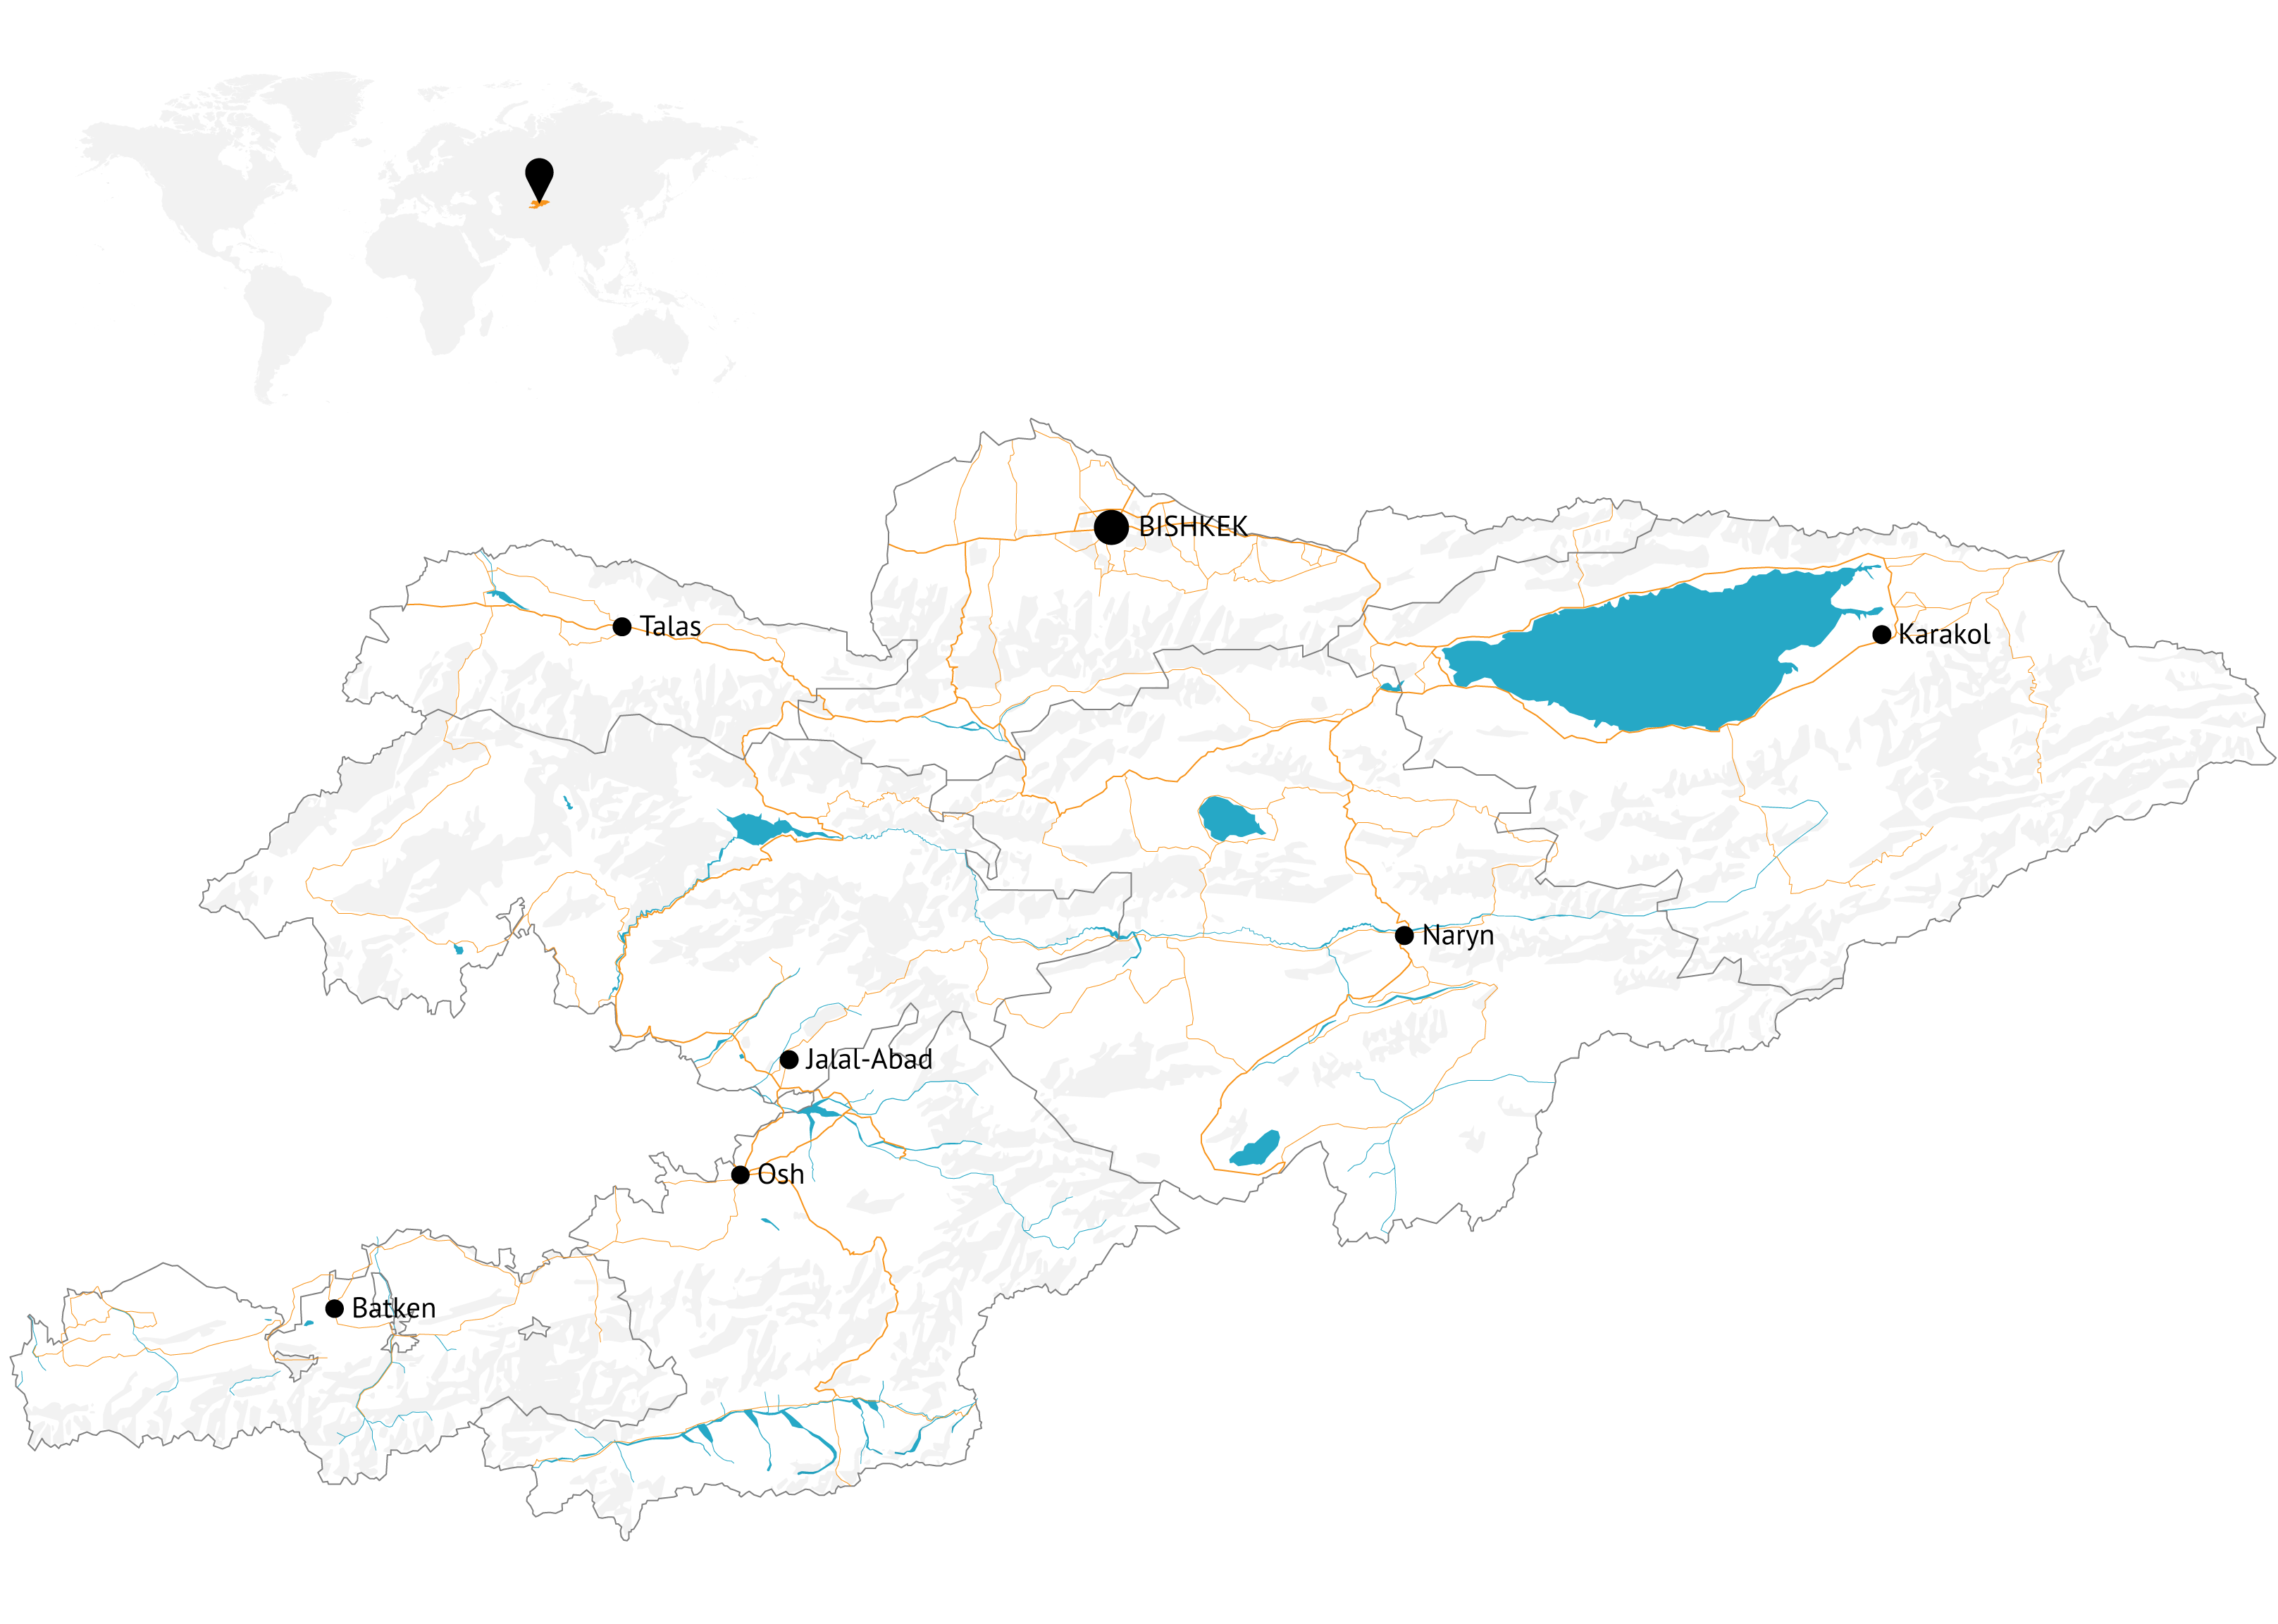 Погода в картасе. Карта Кыргызстана. Контур карта Кыргызстана. Контурная карта Киргизии. Карта Кыргызстана по районам.